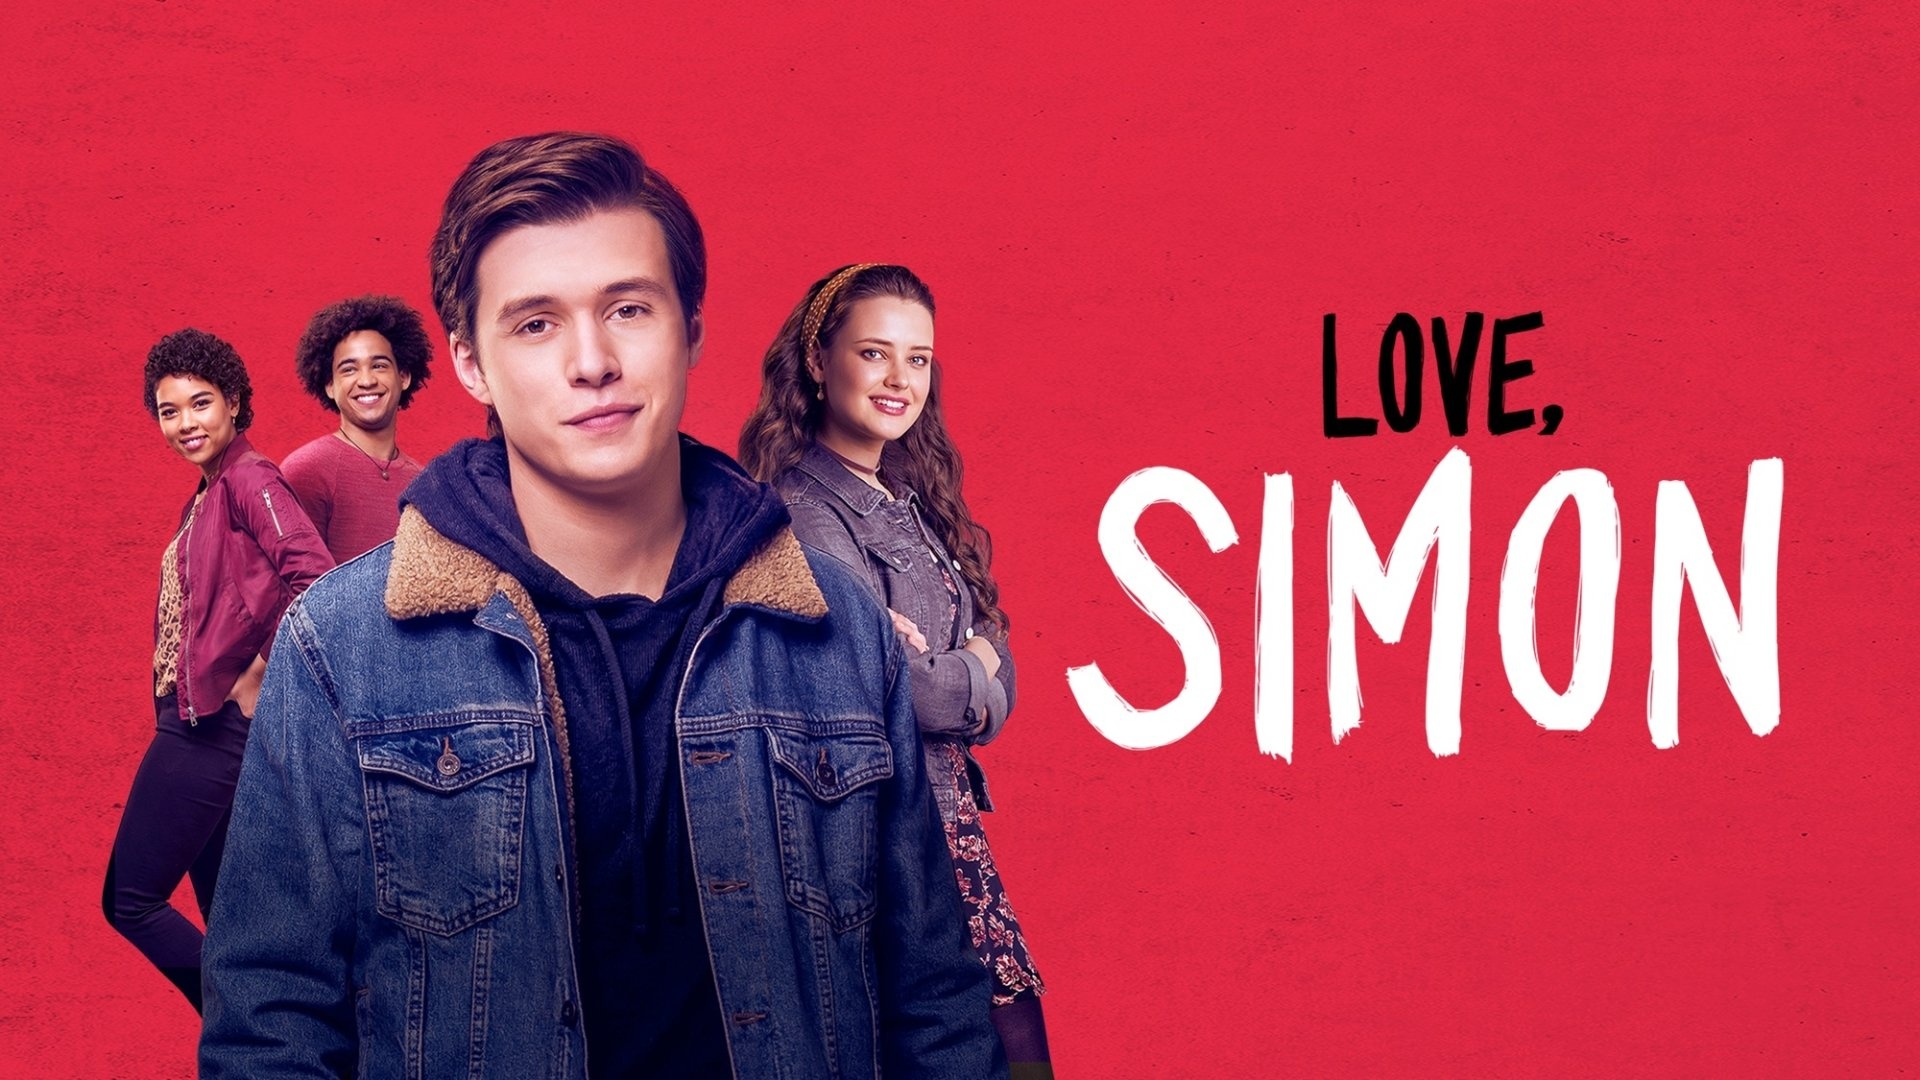 Love, Simon movie, Teen romance, LGBT representation, Heartfelt story, 1920x1080 Full HD Desktop